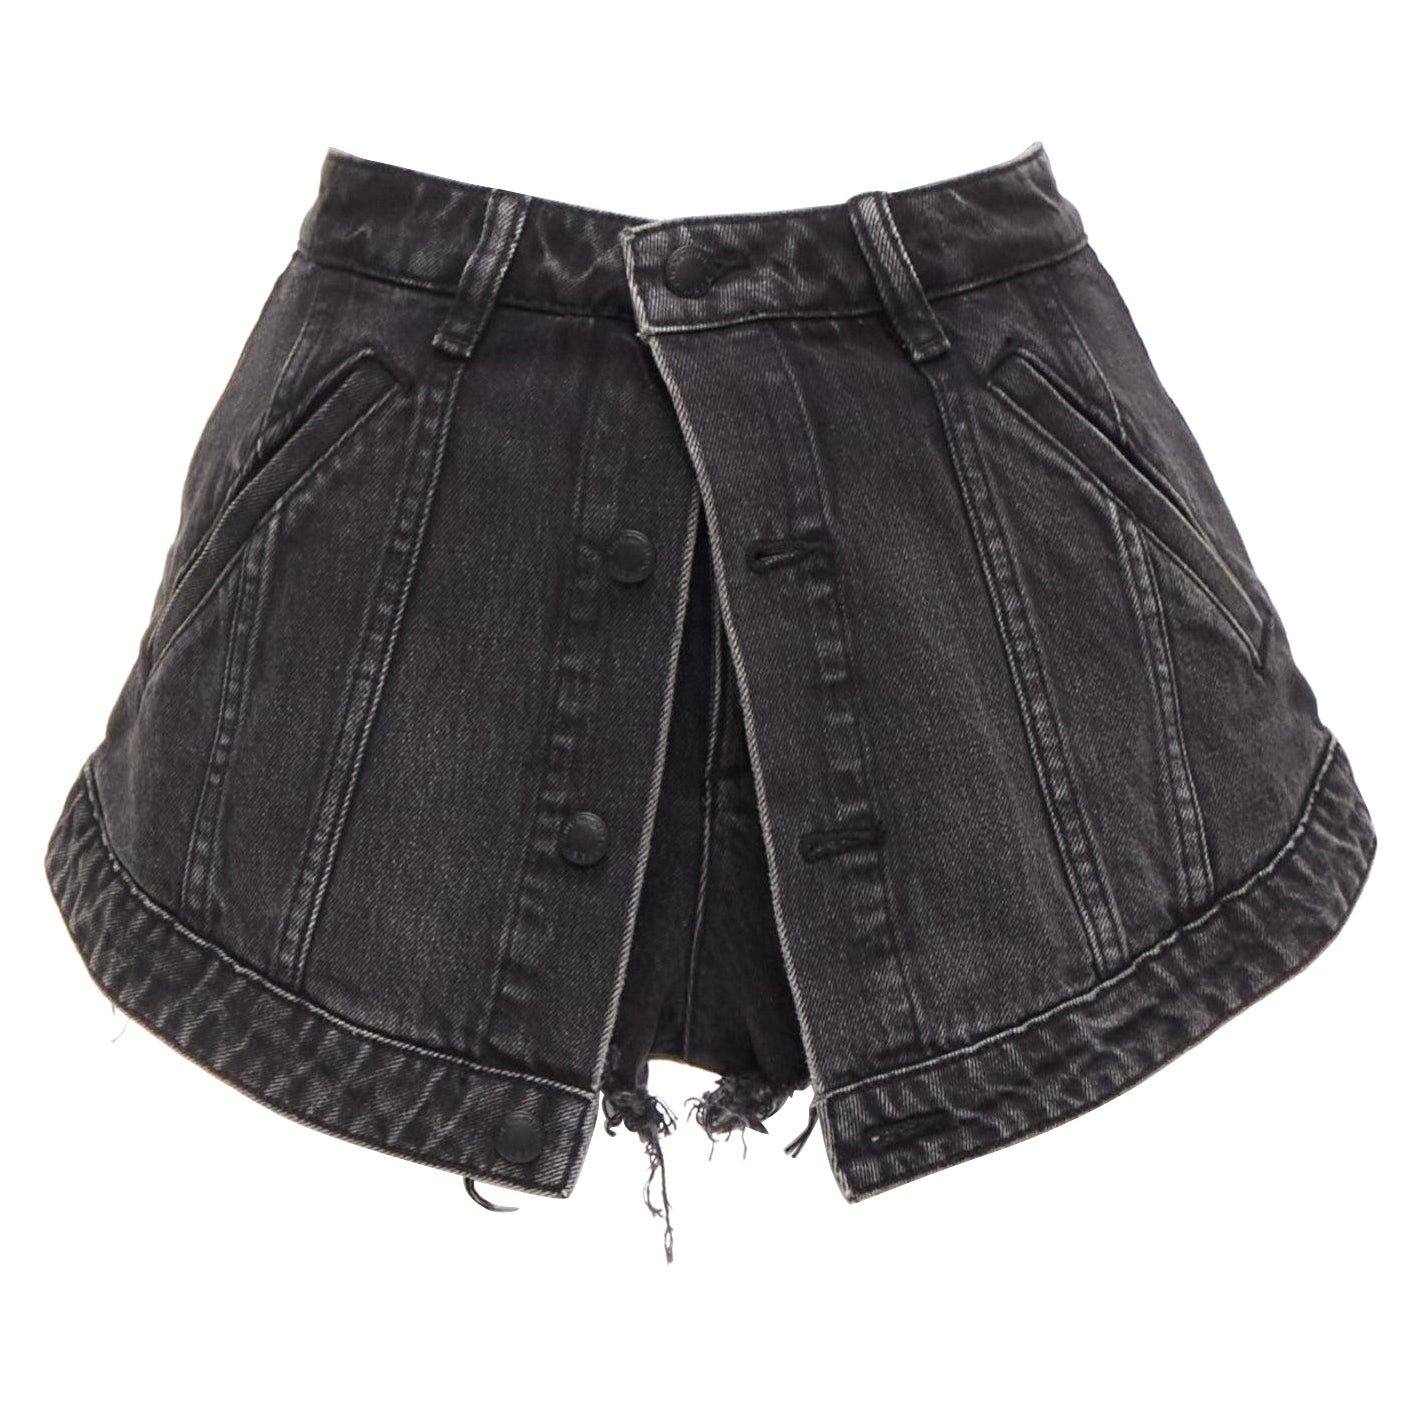 ALEXANDER WANG black washed cotton layered skort high waist cutaway shorts 25" For Sale